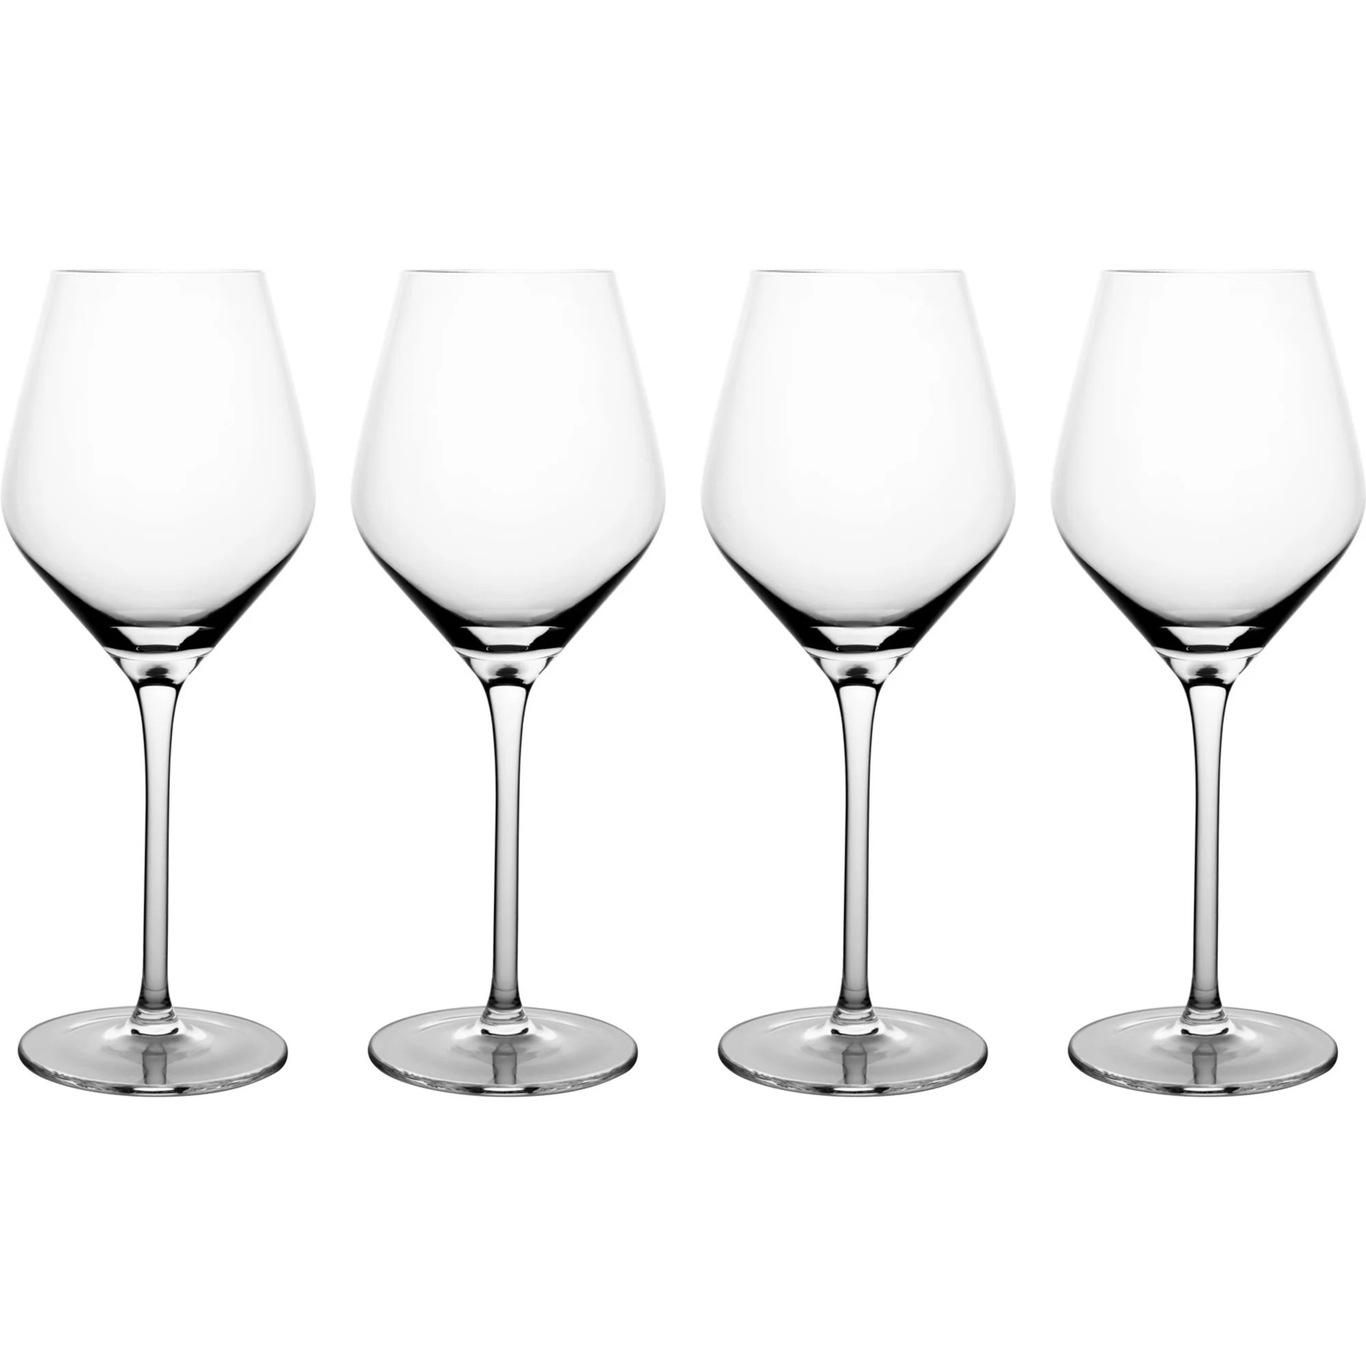 https://royaldesign.com/image/2/mareld-mareld-red-wine-glass-460ml-4pcs-0?w=800&quality=80